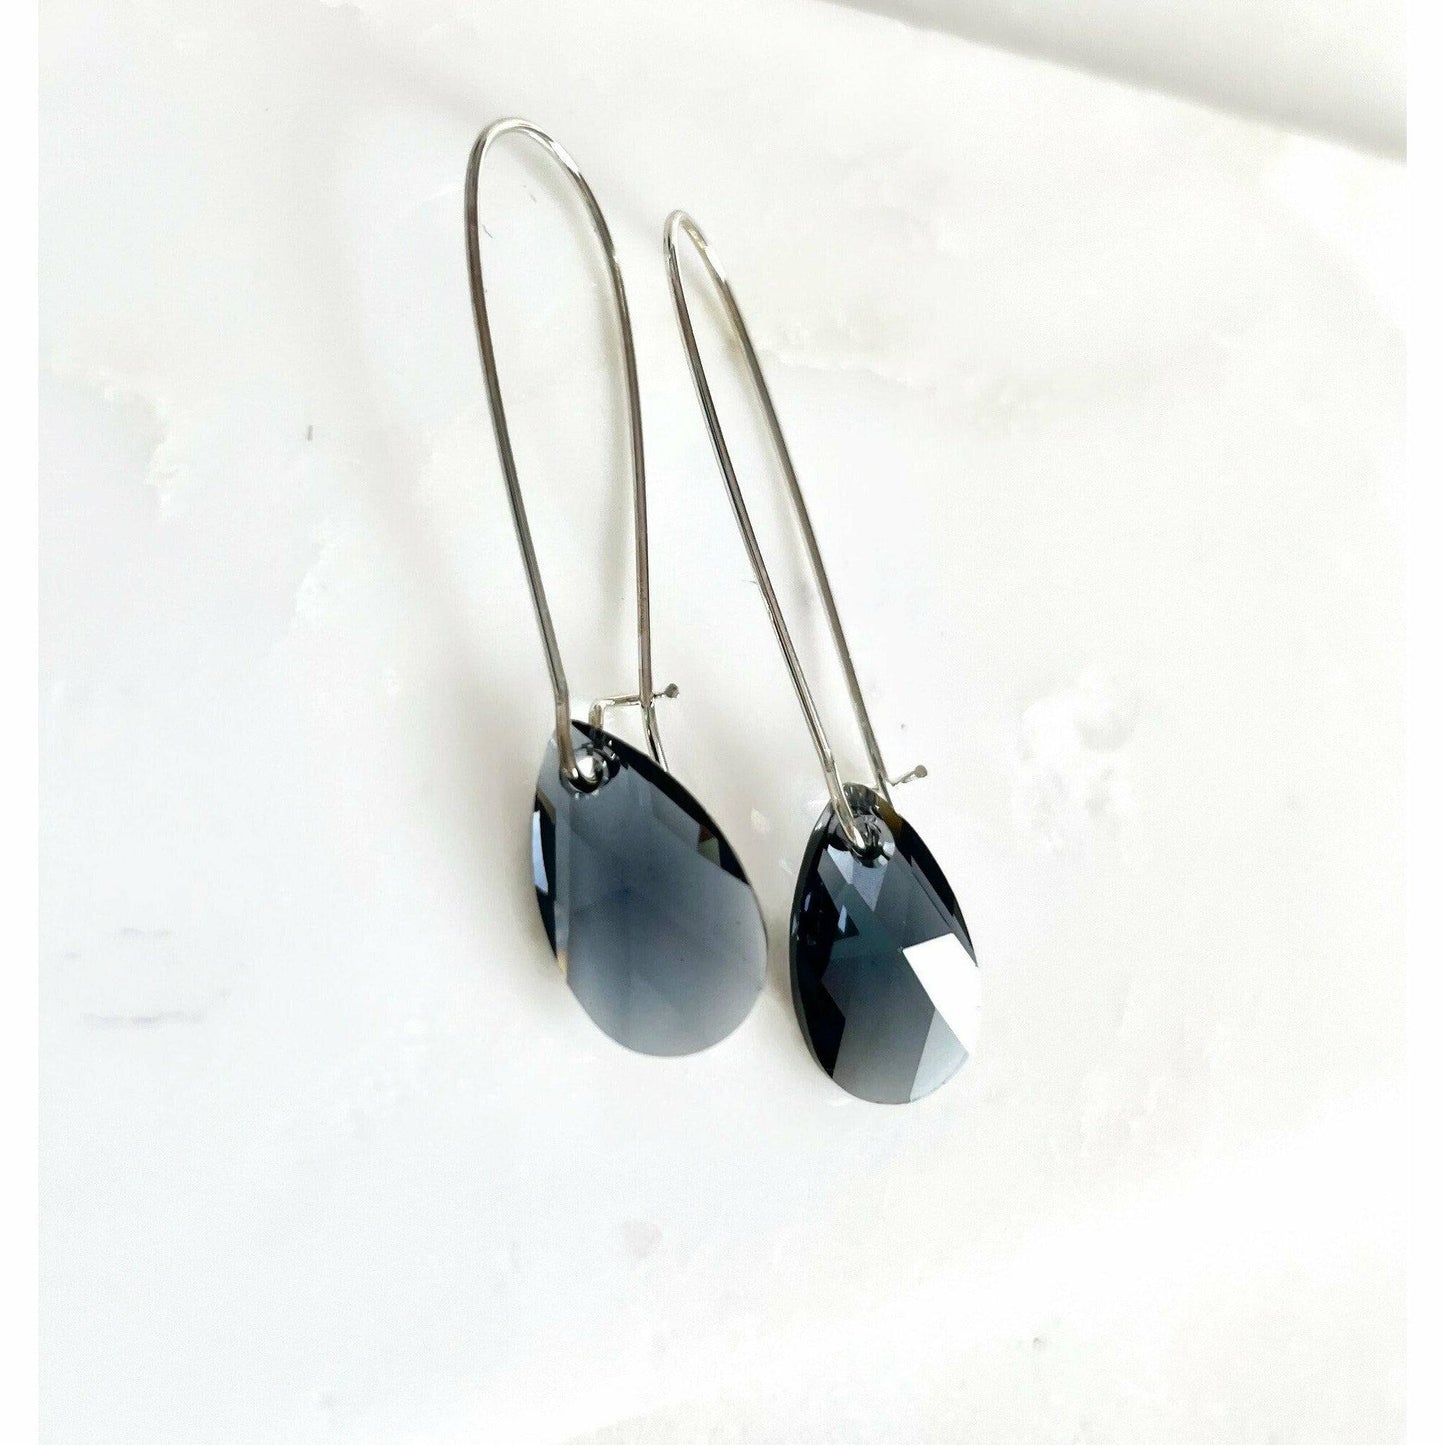 Long graphite gray crystal earrings